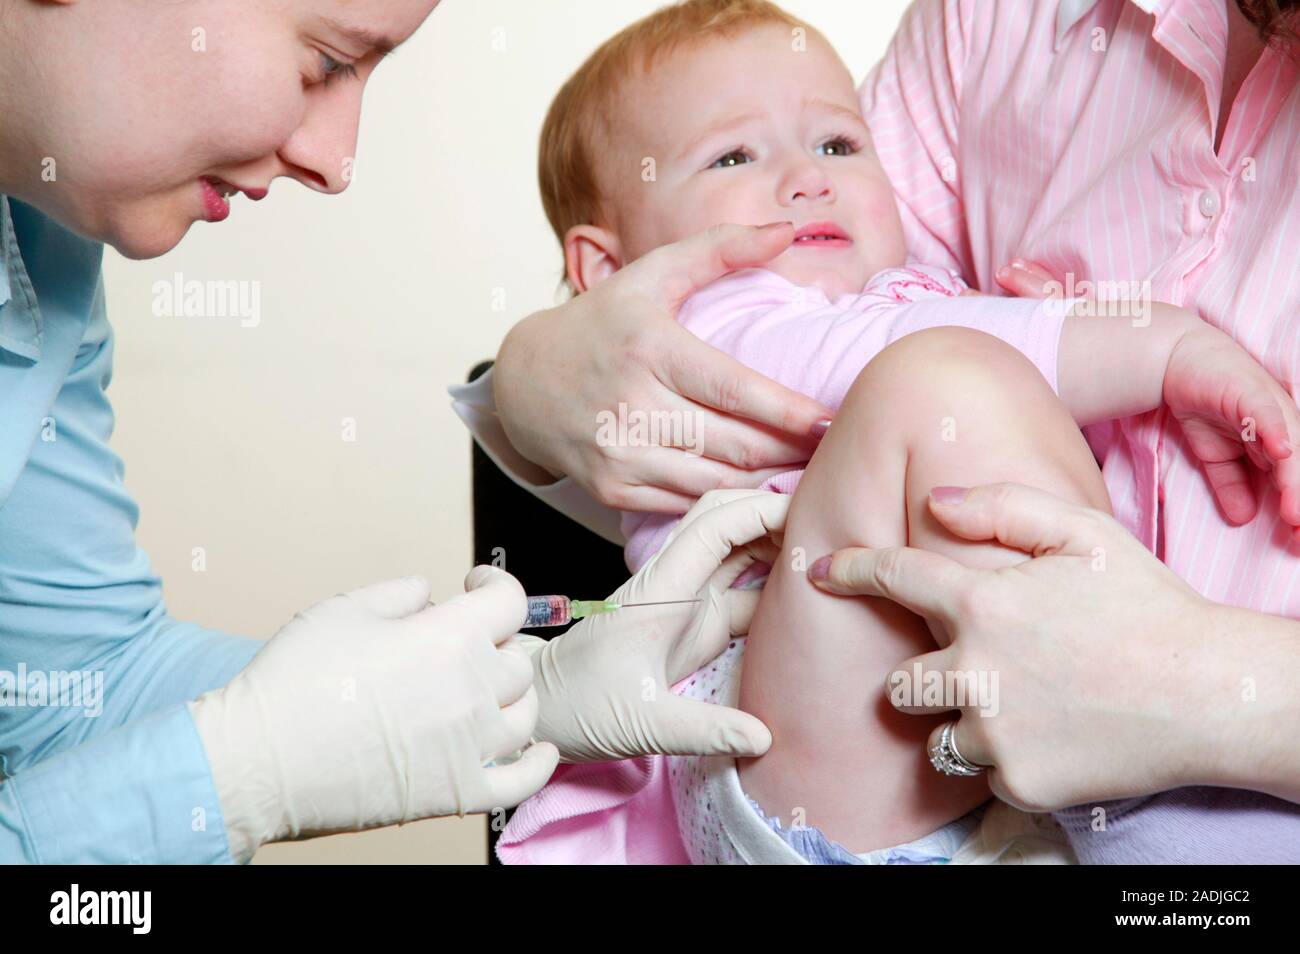 Вакцина от кори где сделать. Вакцинация краснухи у детей. Прививка детям. Профилактика краснухи у детей прививки. Вакцинация взрослых.